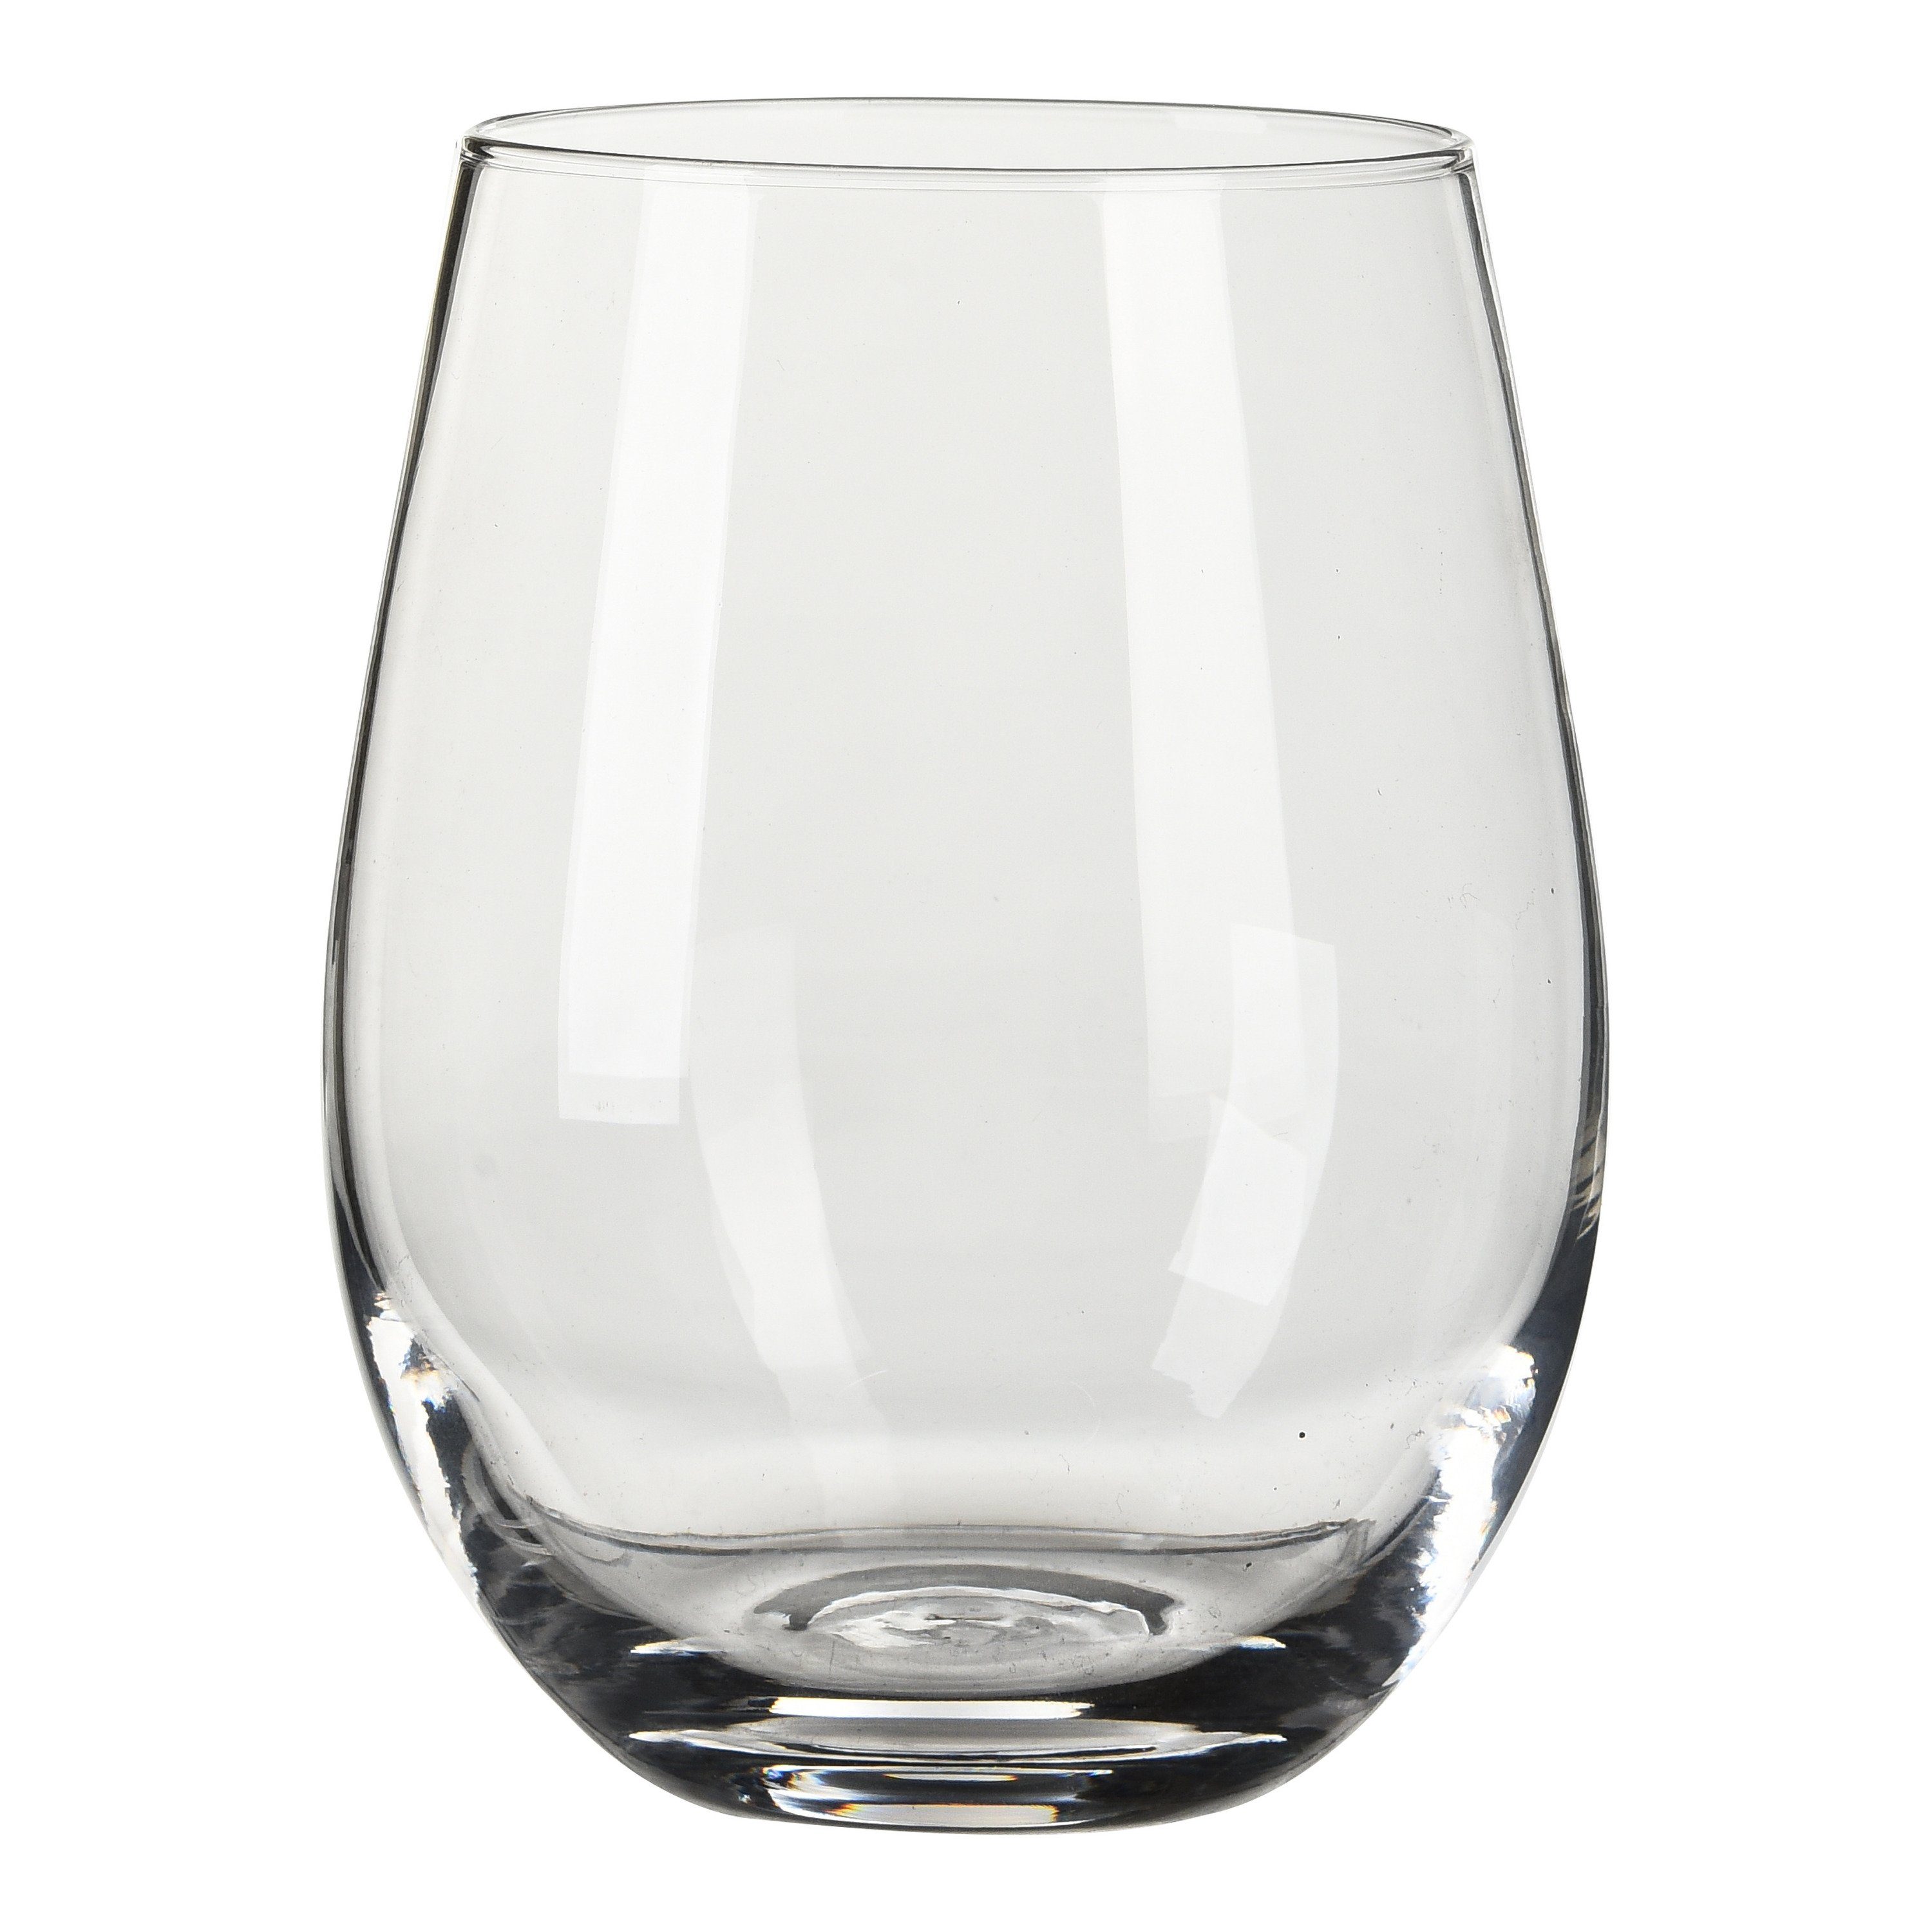 Depot Glas Glas Klar Flavia, 100% Trinkglas